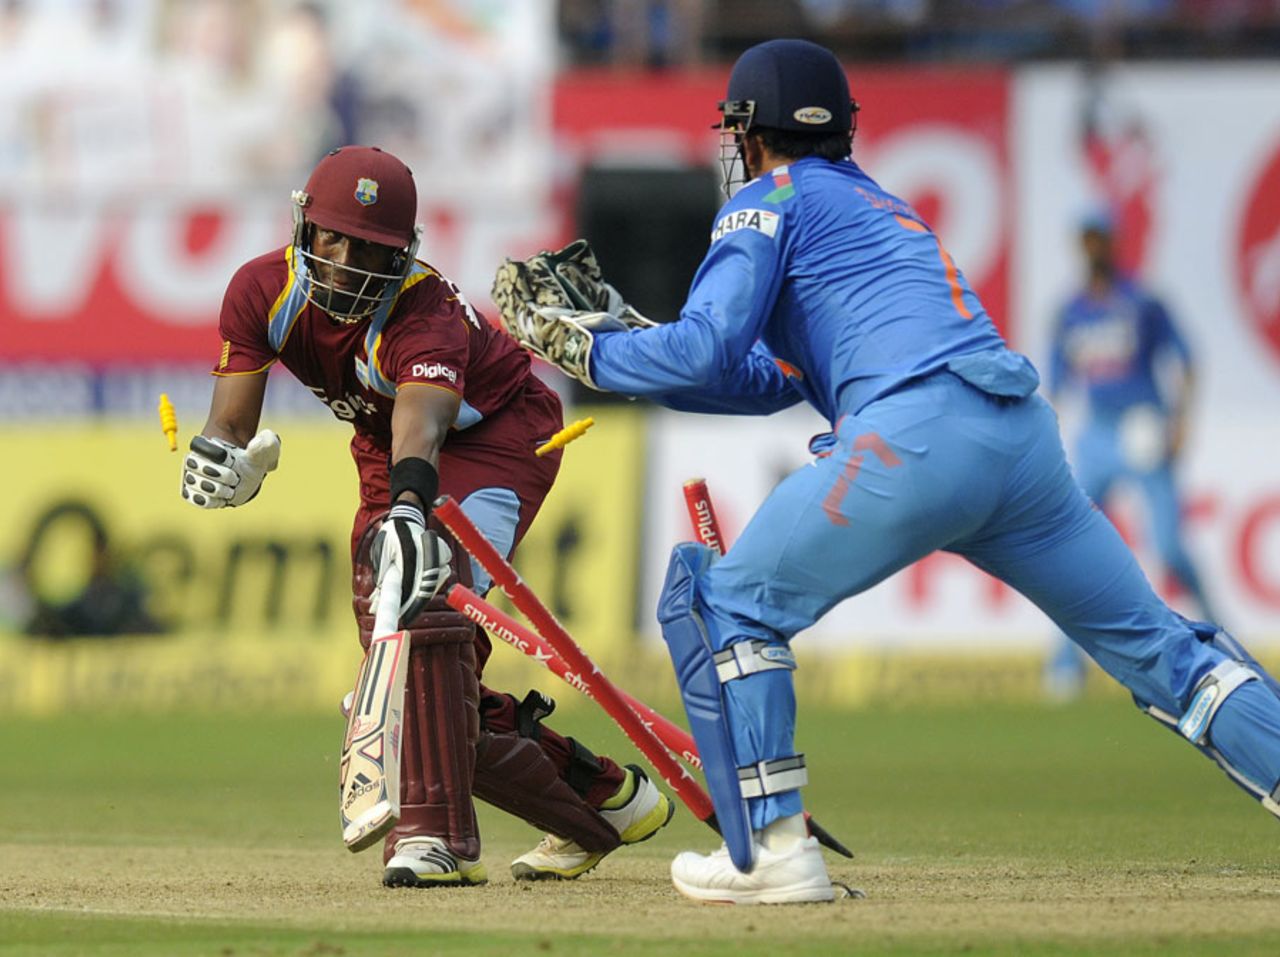 Dwayne Bravo was stumped for 24, India v West Indies, 1st ODI, Kochi, November 21, 2013